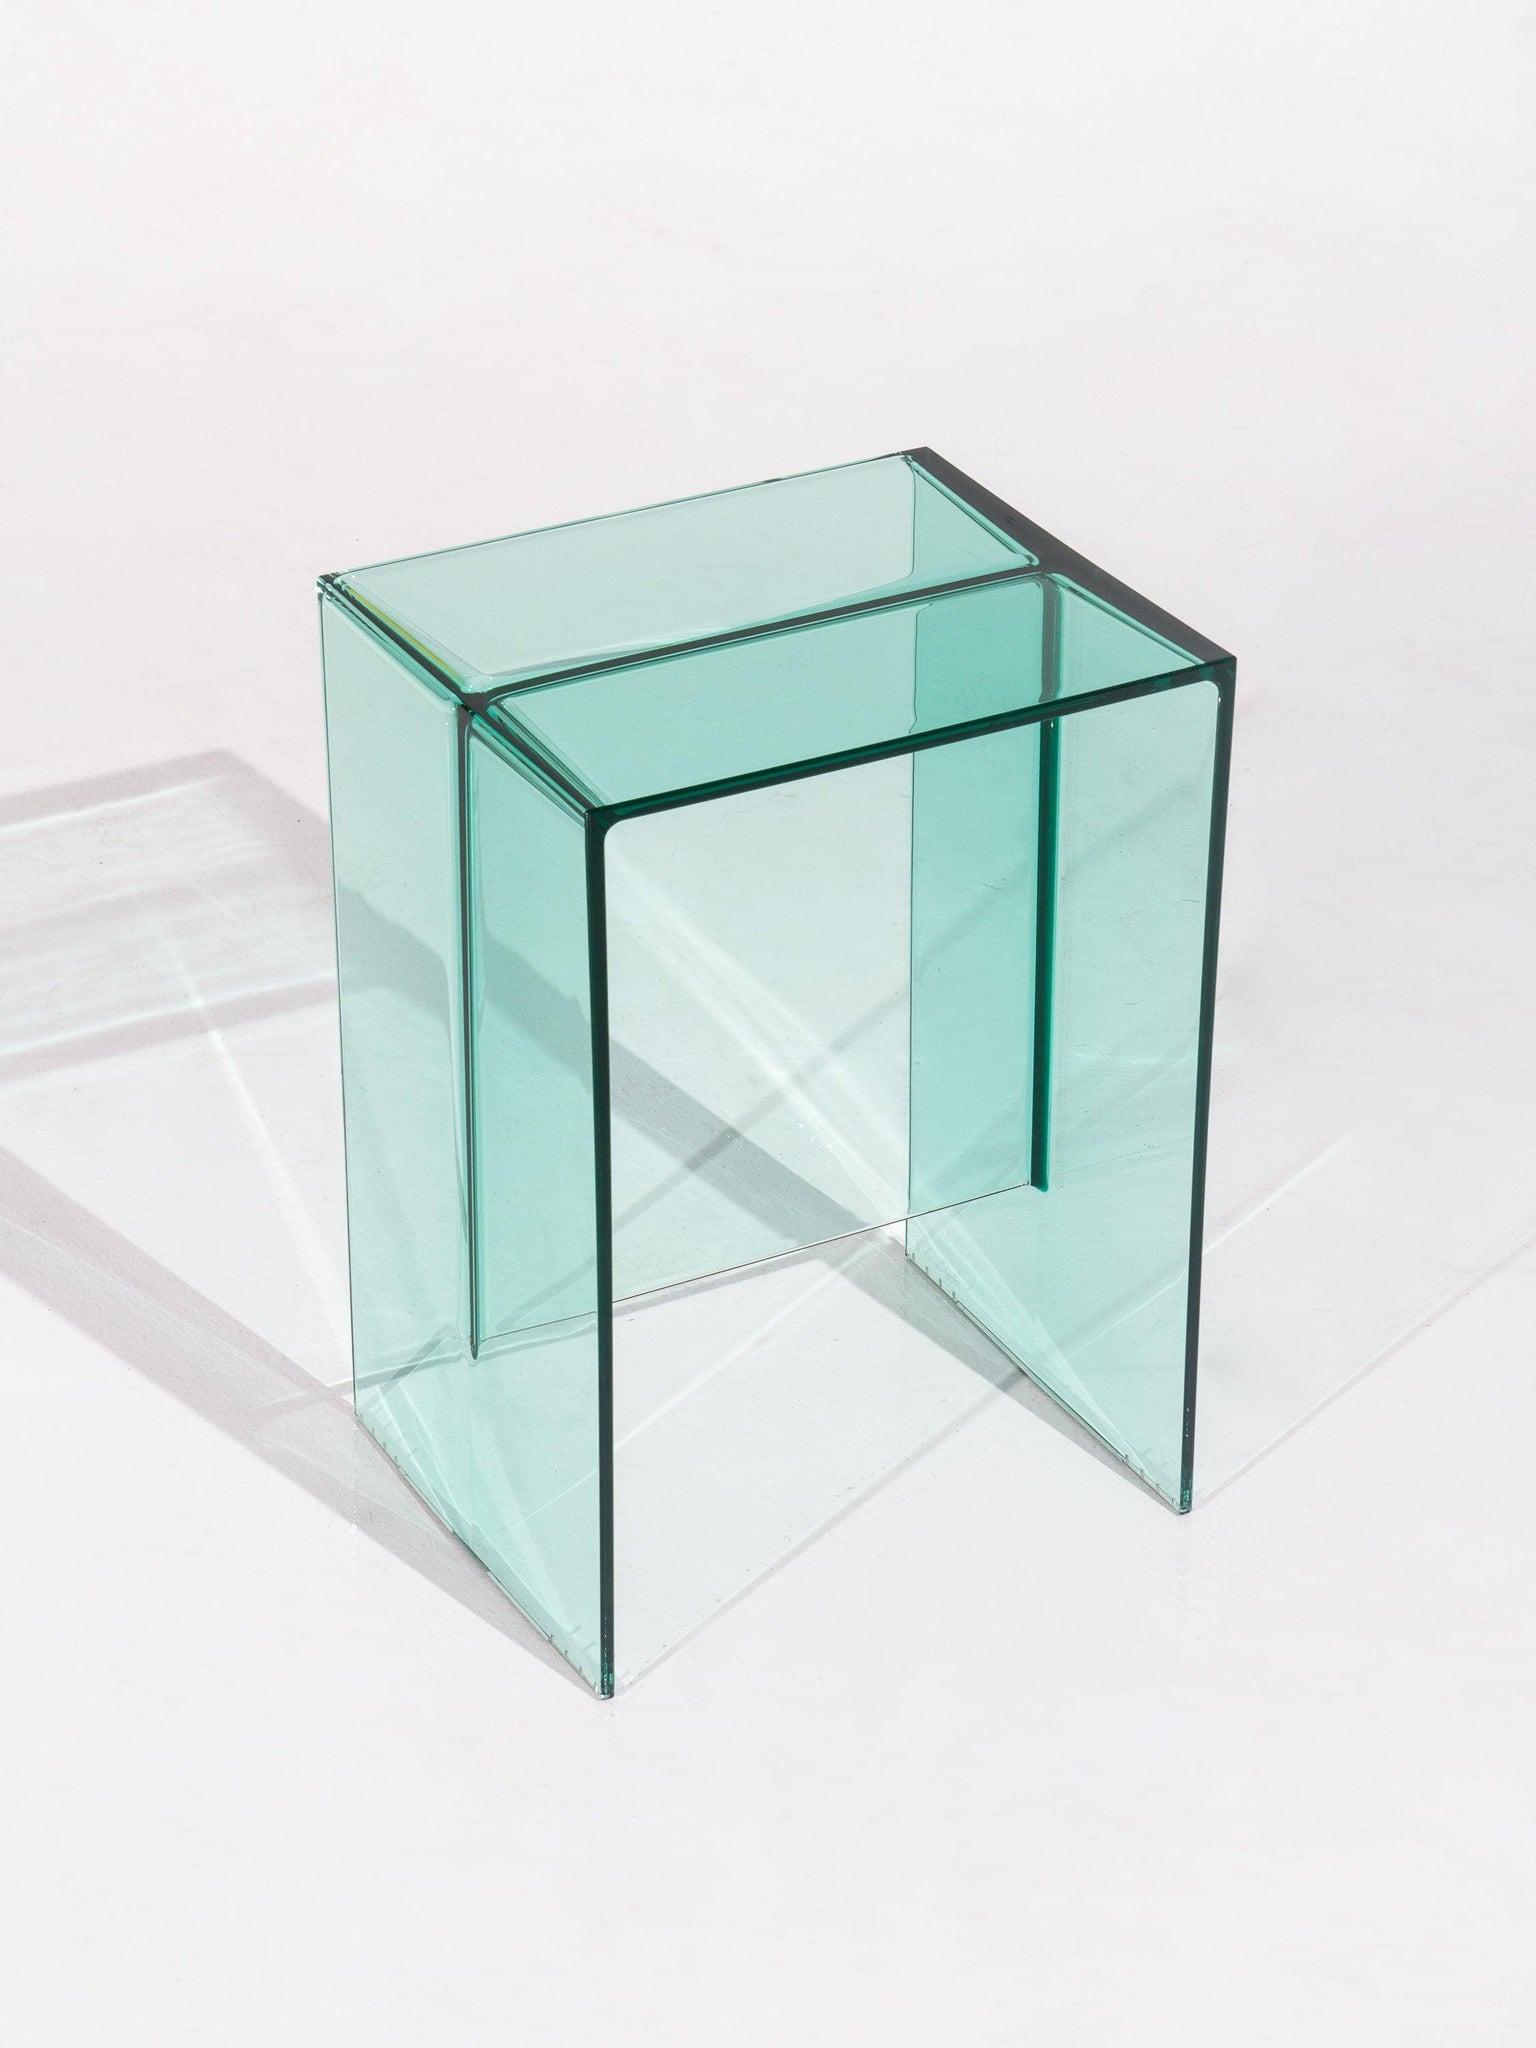 Max Beam Tables by Kartell: Rental - Bi-Rite Studio